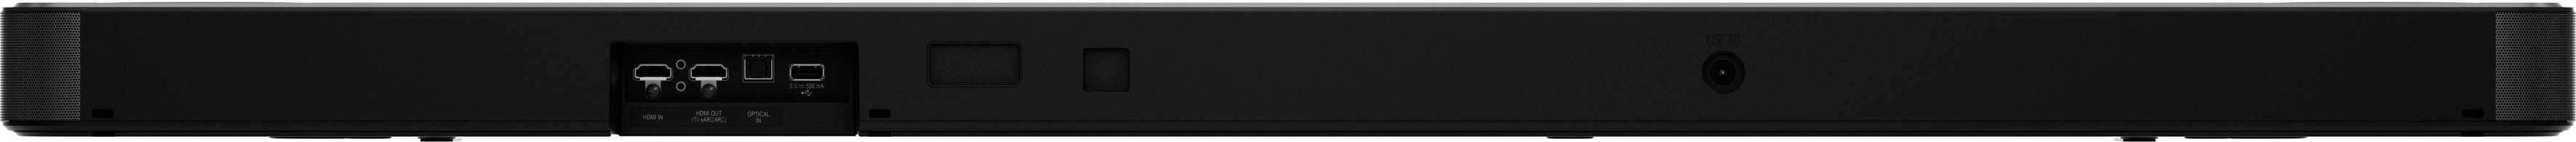 LG SPD75YA 400 (WiFi), W) 3.1.2 Soundbar (Bluetooth, WLAN